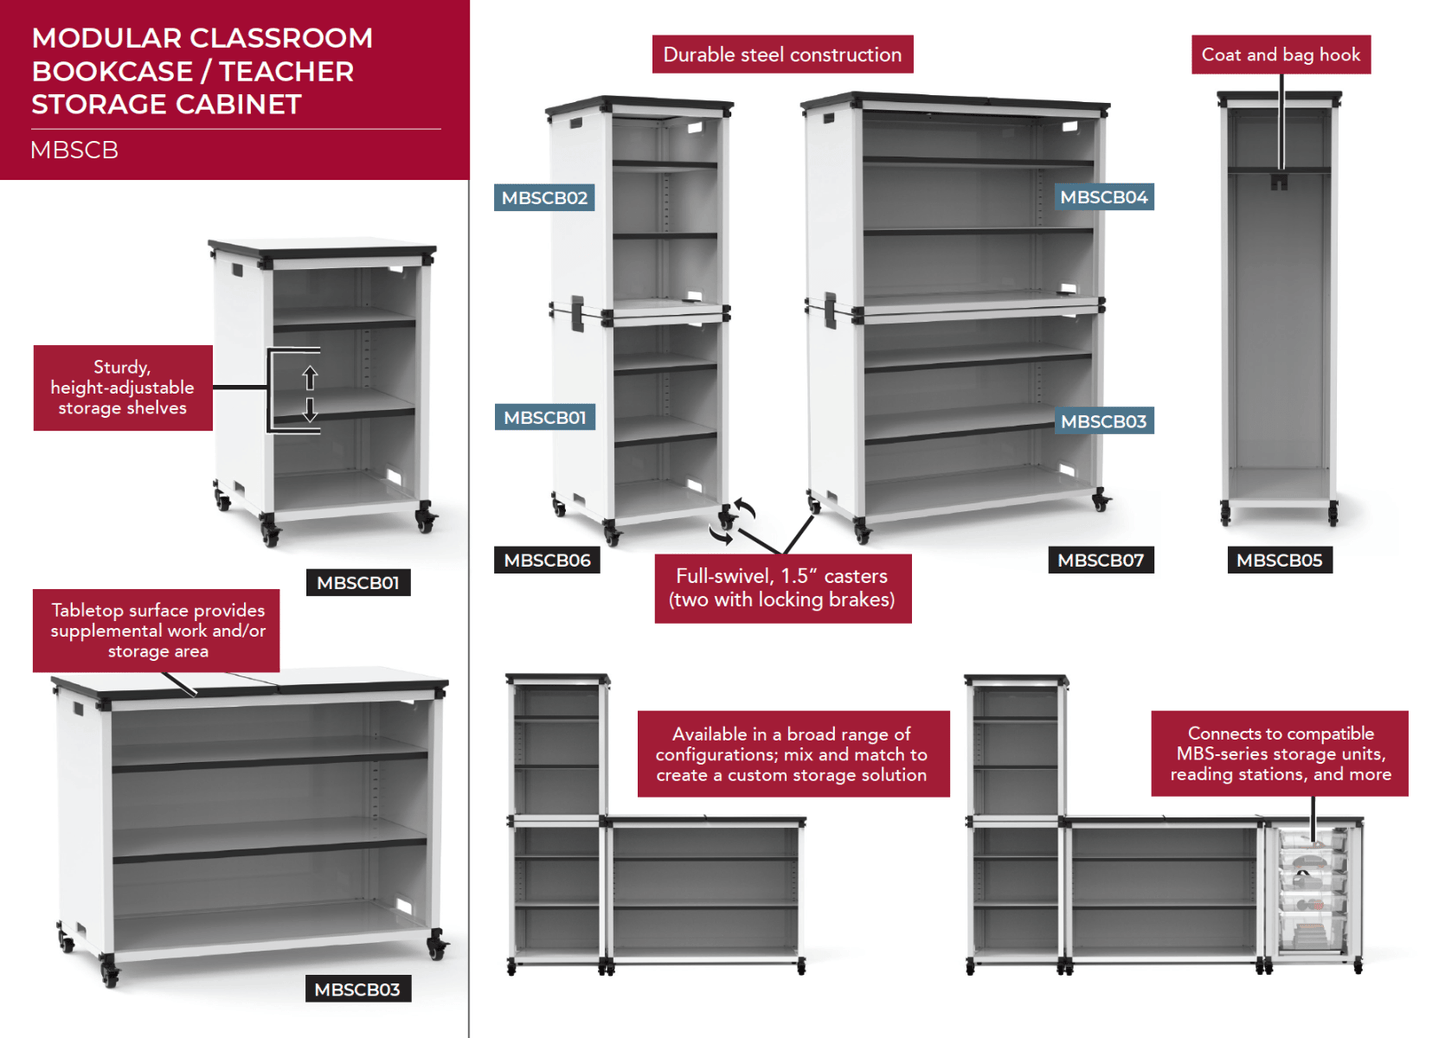 Luxor Modular Classroom Bookshelf - Add-On Wide Module (LUX-MBSCB04) - SchoolOutlet